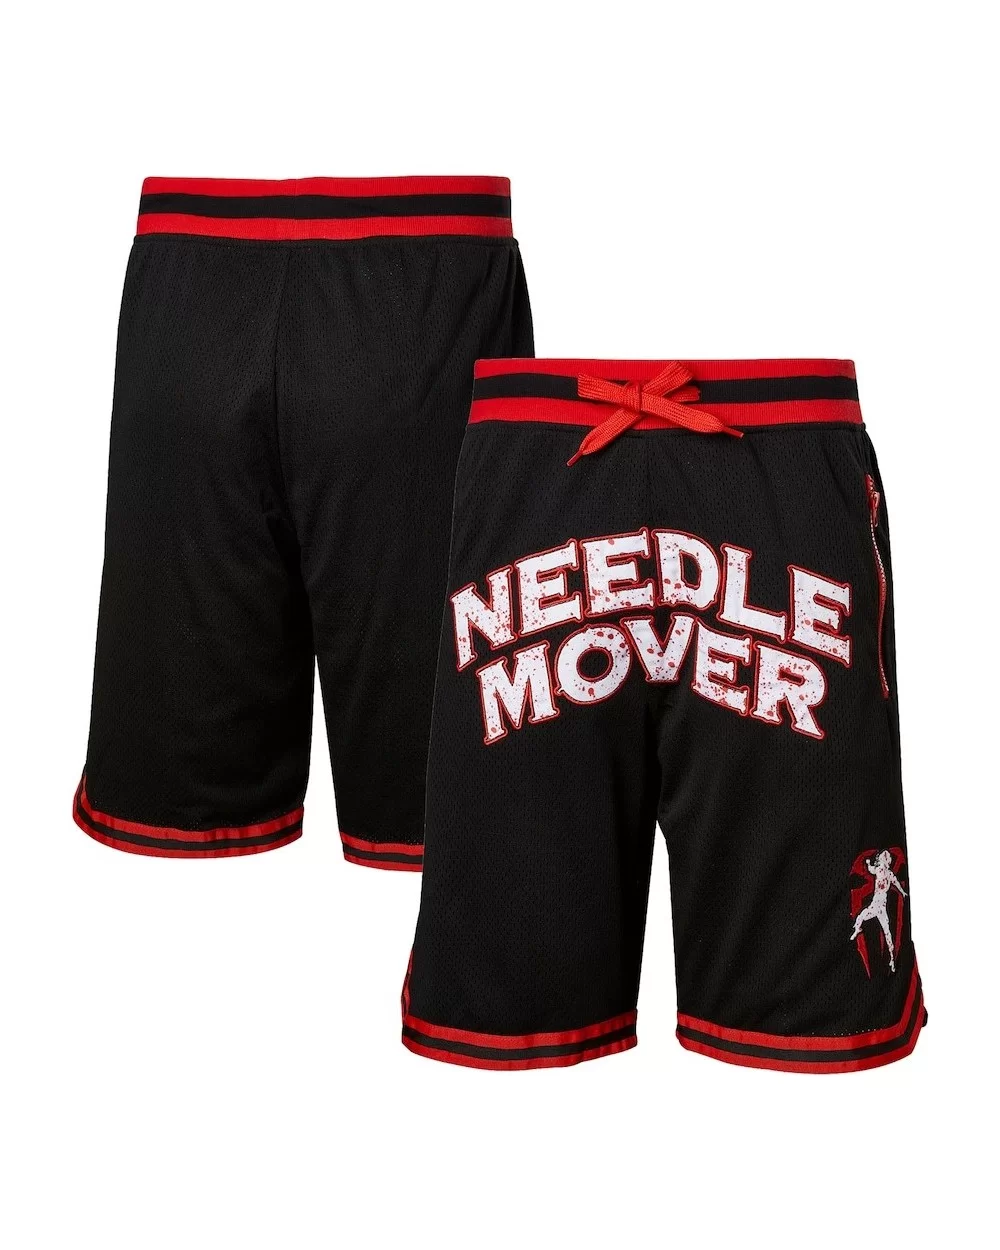 Men's Black Roman Reigns Needle Mover Shorts $11.04 Apparel